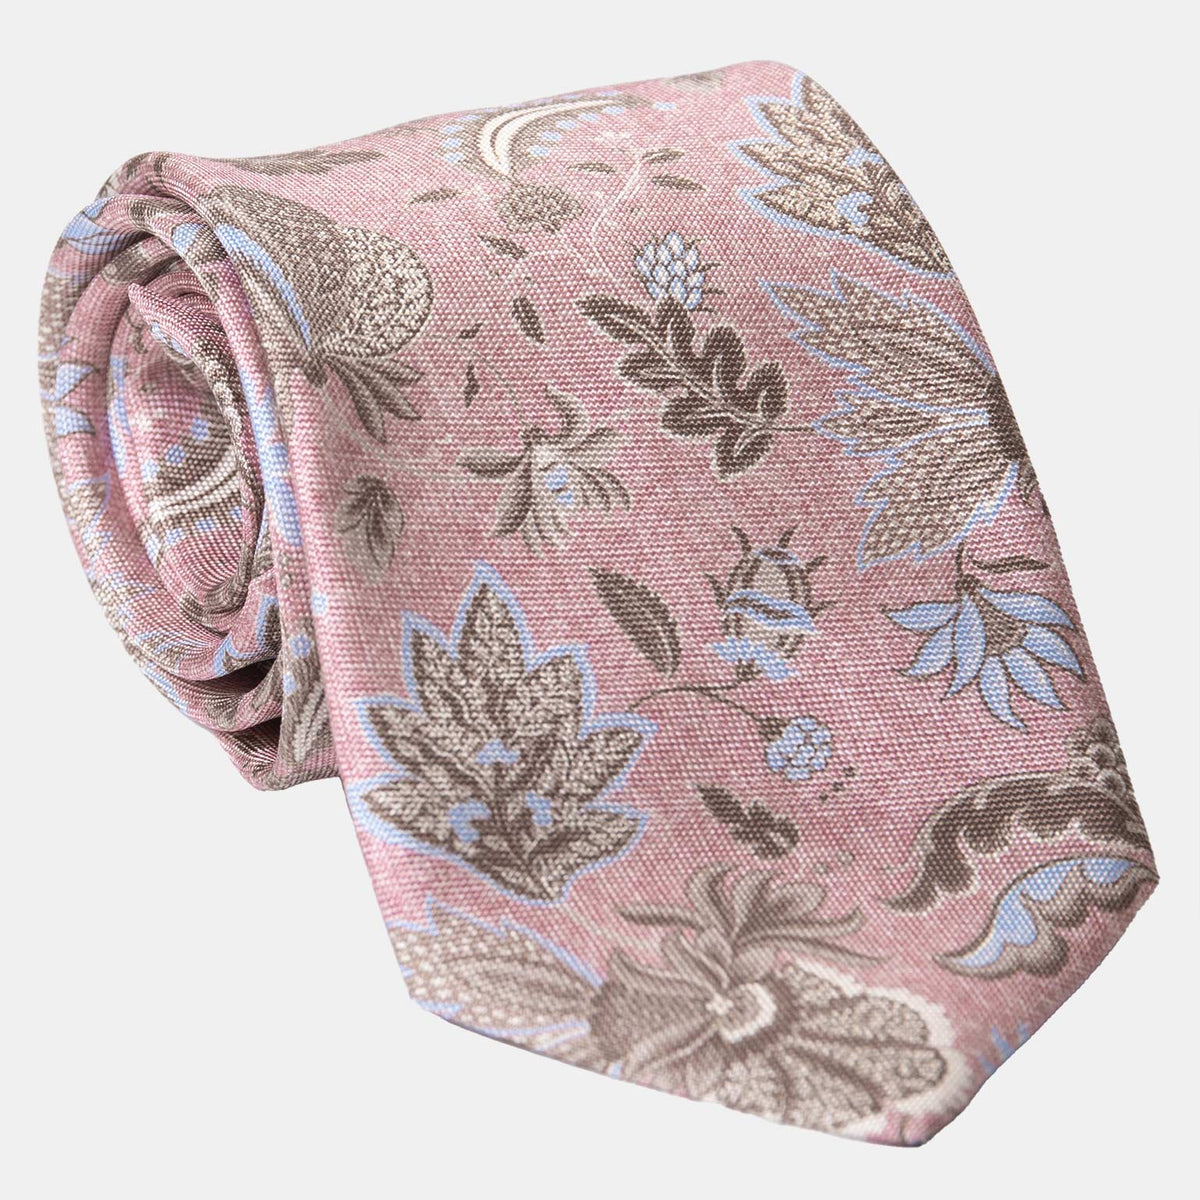 Handmade Extra Long Pink Floral Silk Tie